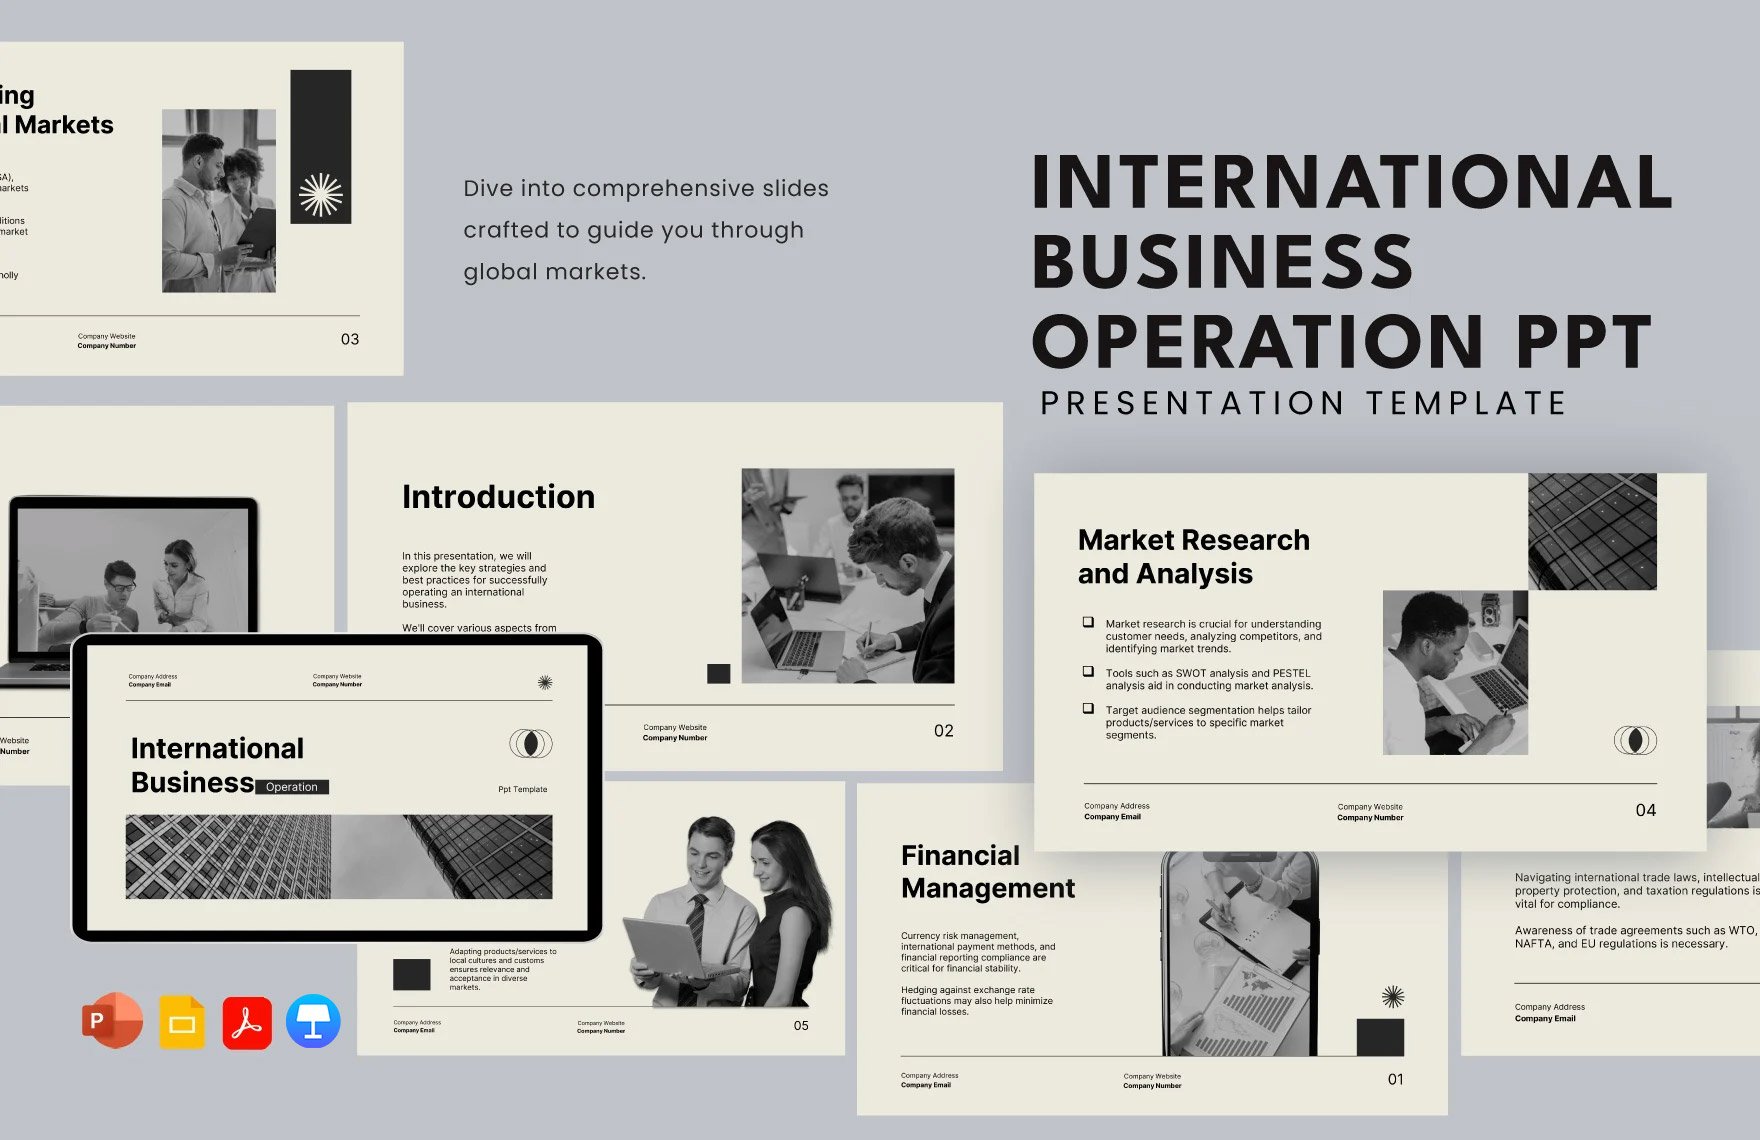 International Business Operation PPT Template